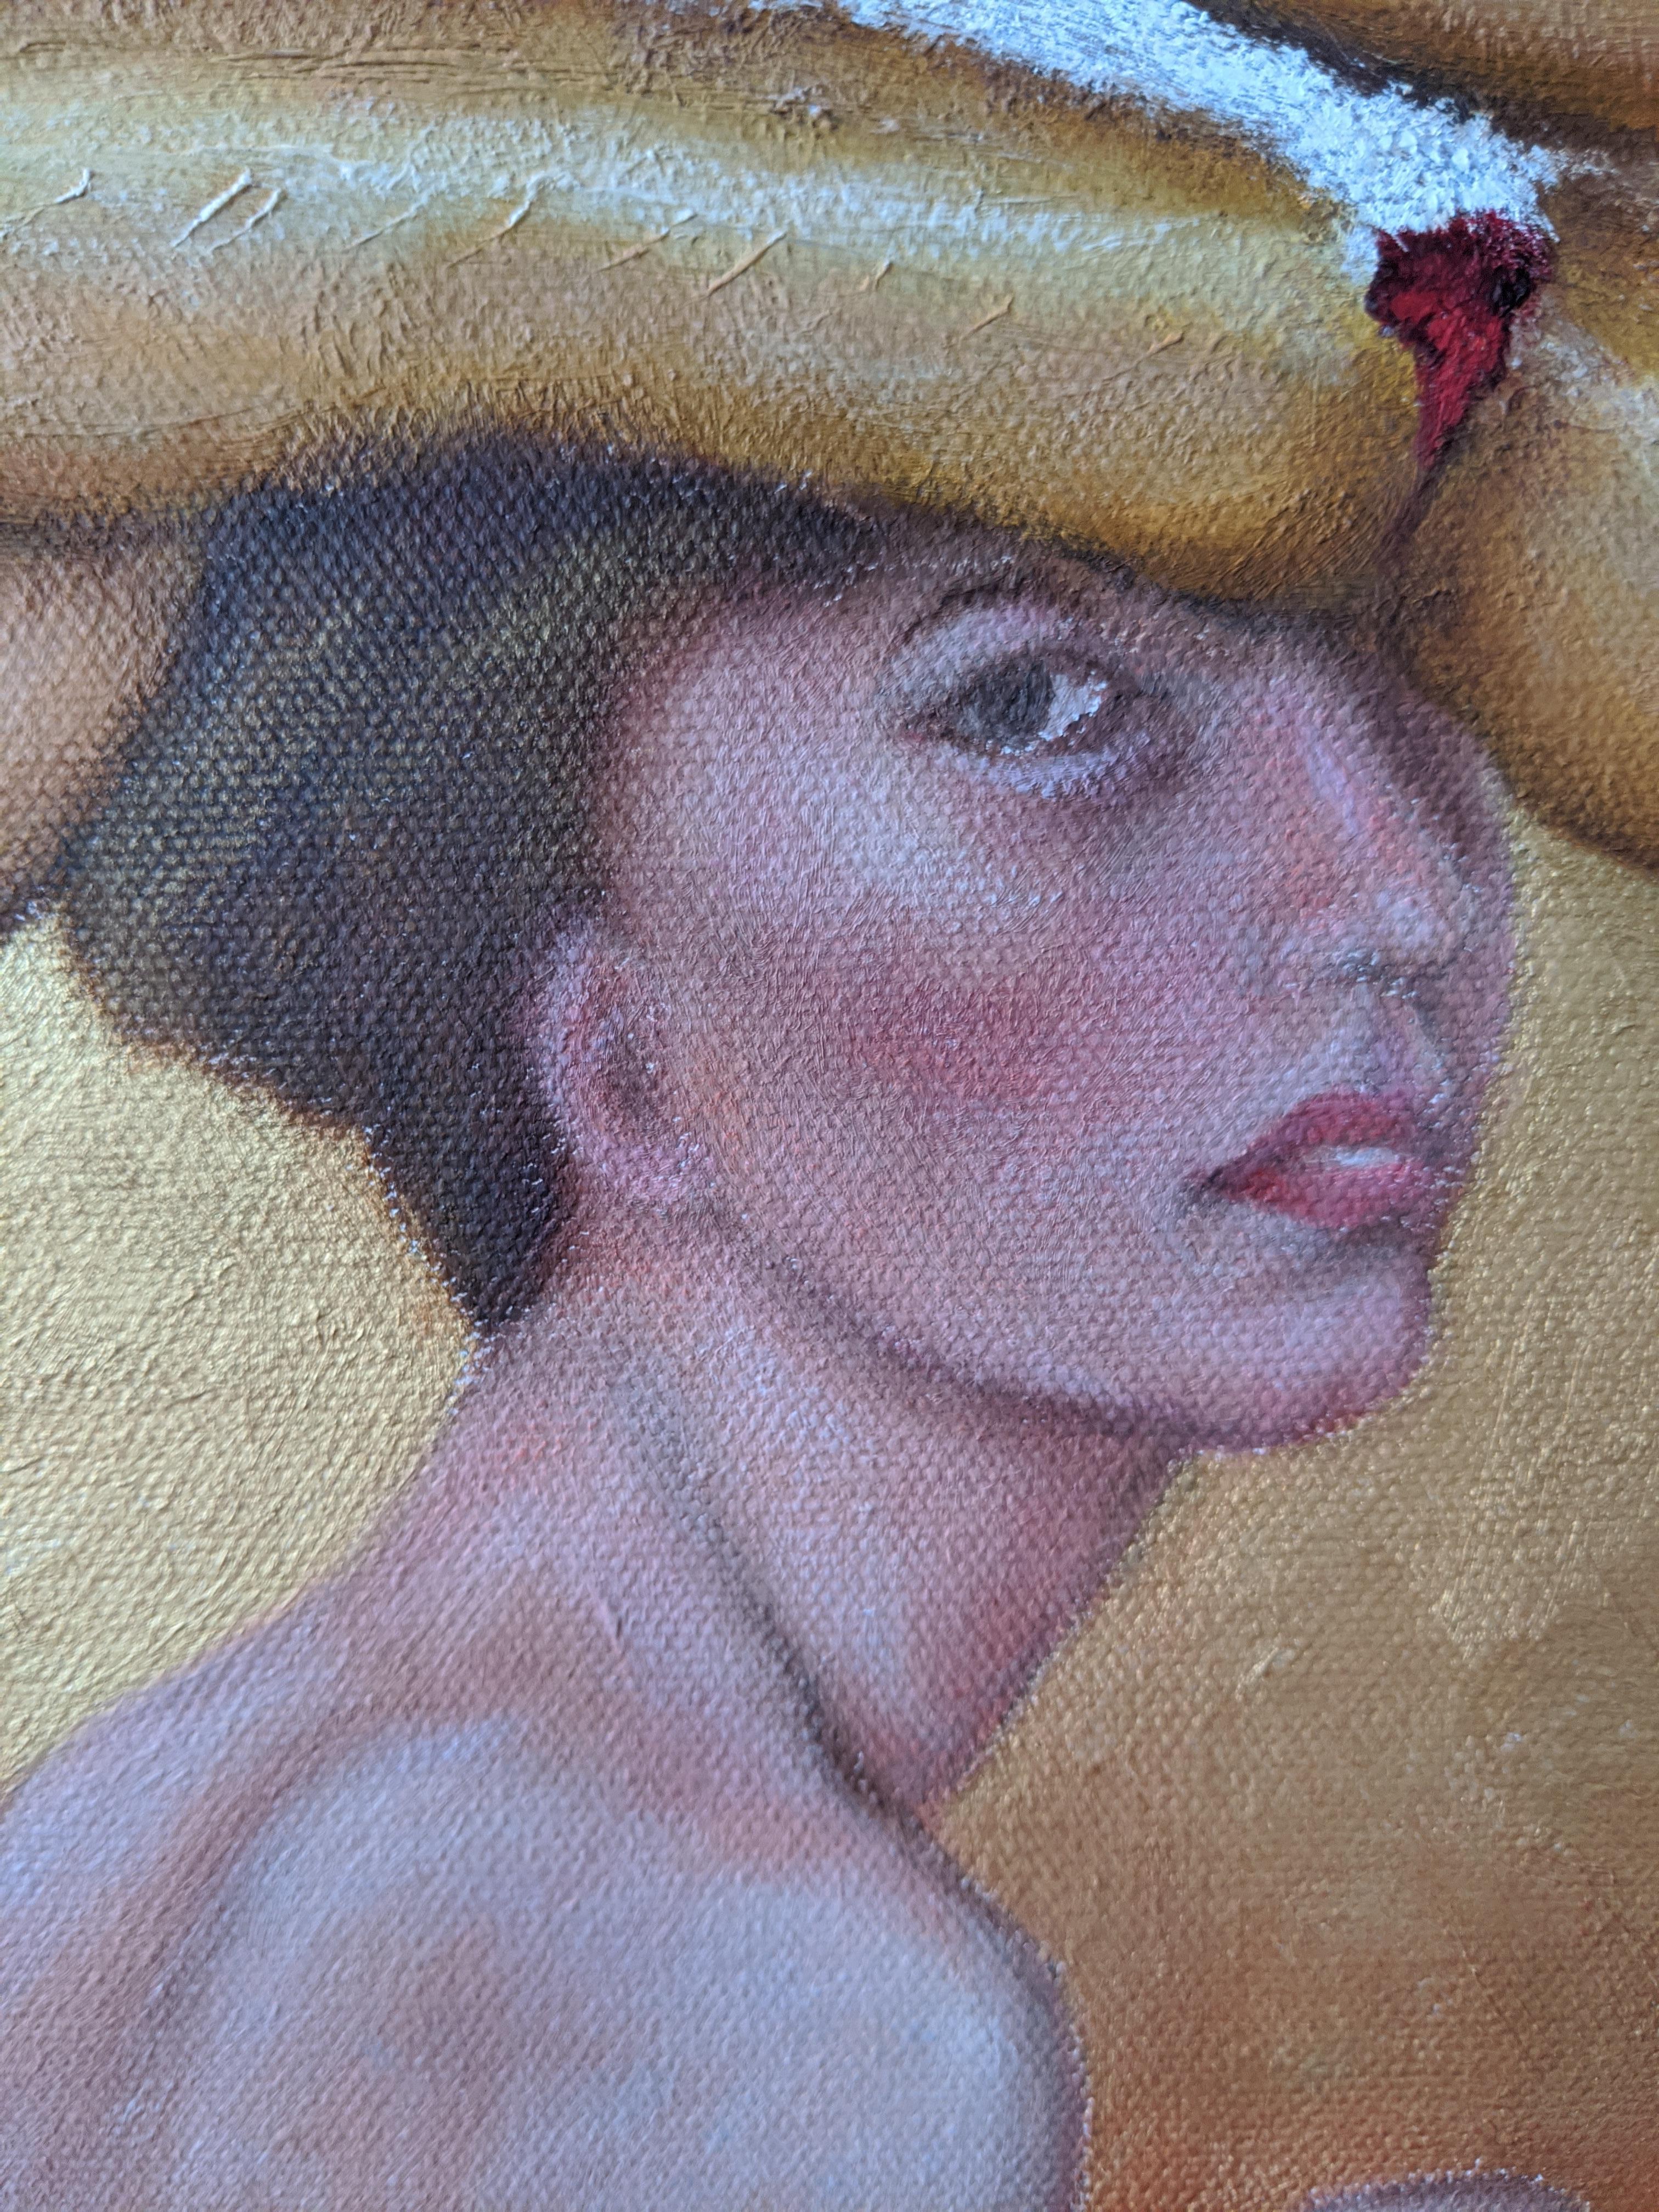 Oil on Canvas Portrait -- Balancing Life's Desires 4